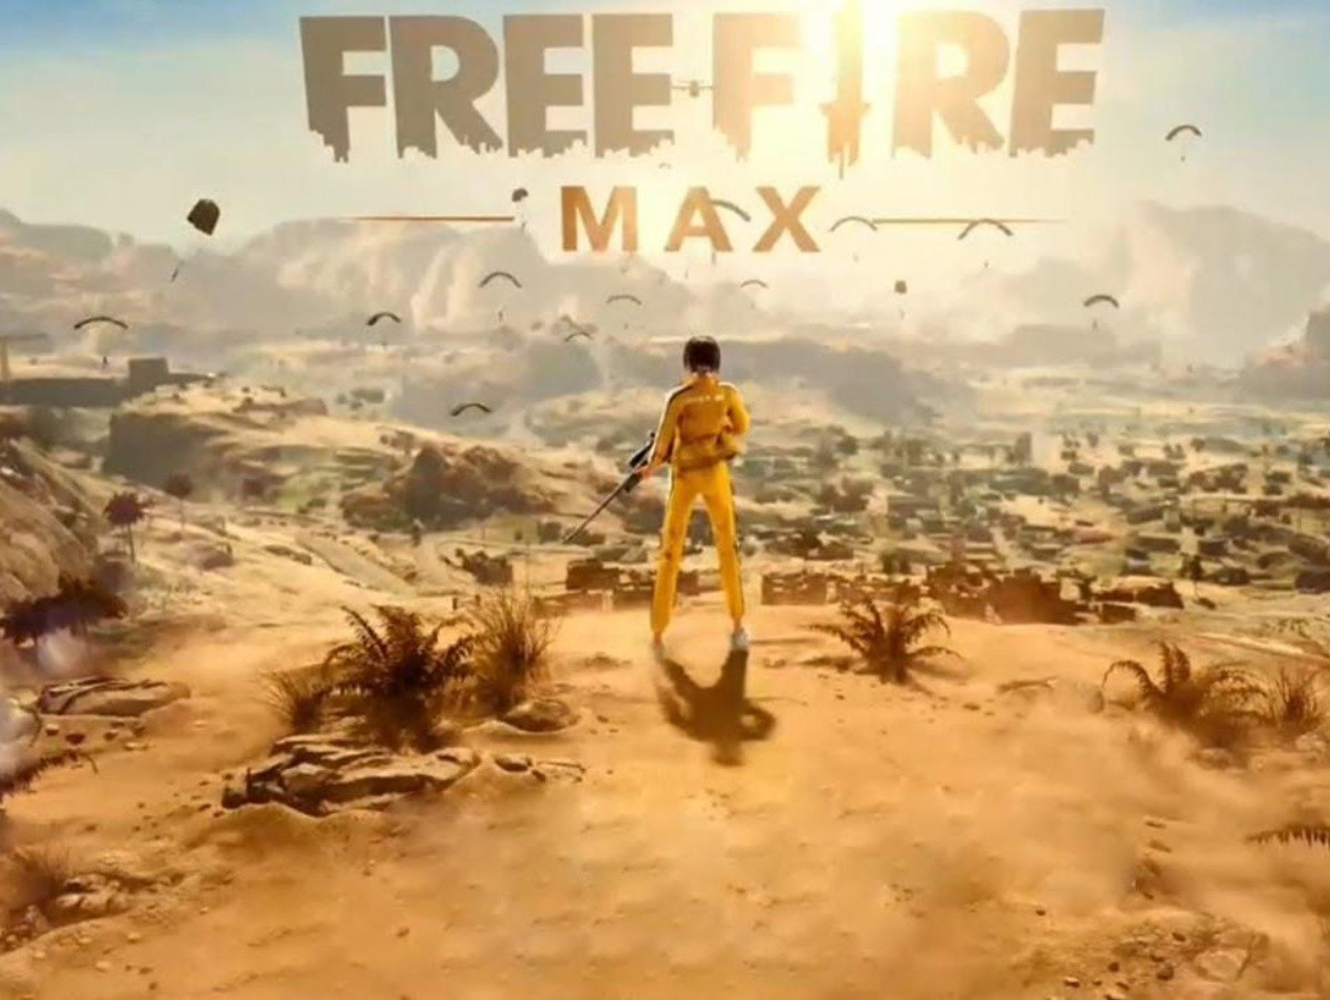 Free Fire Max llegará el 28 de septiembre a tu dispositivo móvil